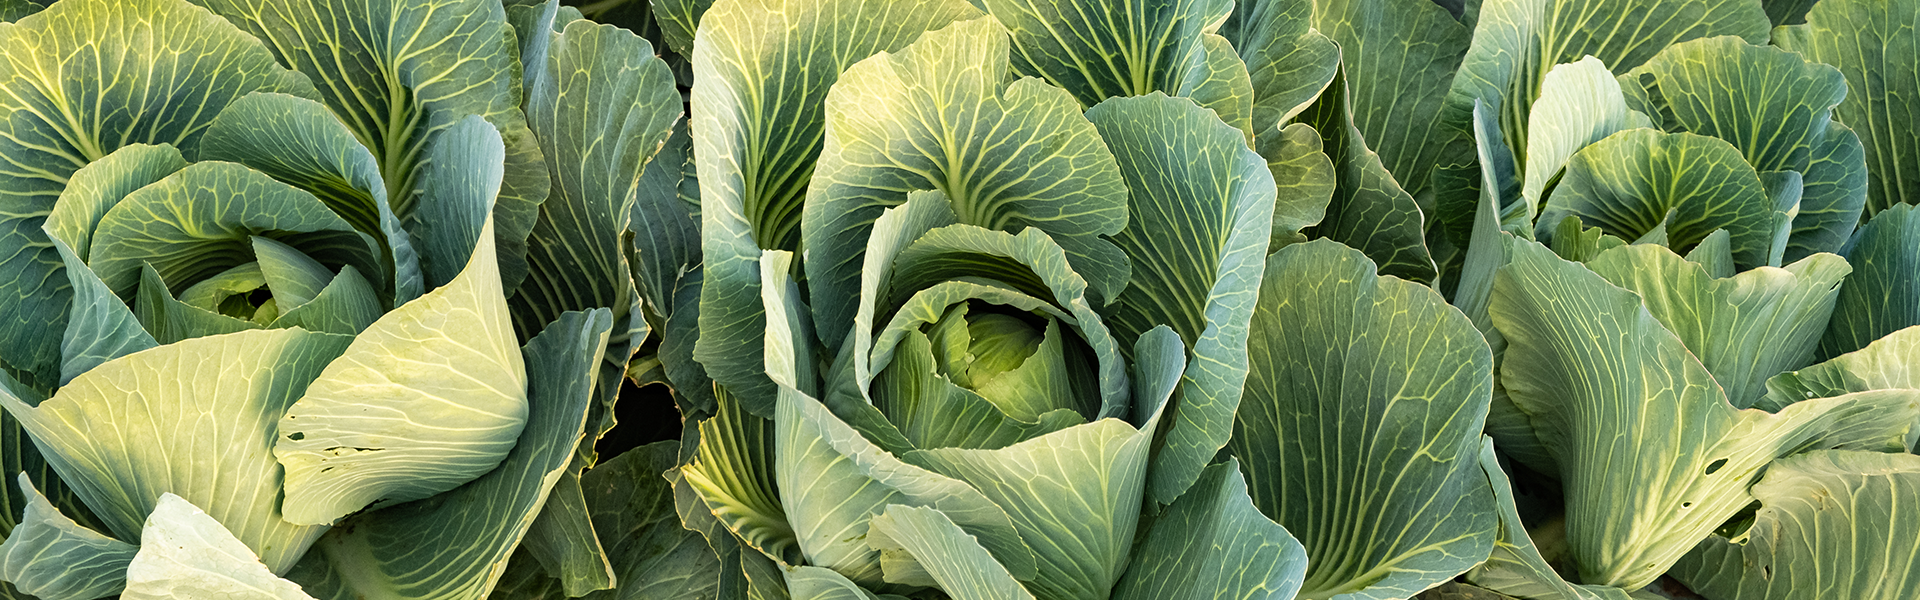 Vegetables and Horticultural background image